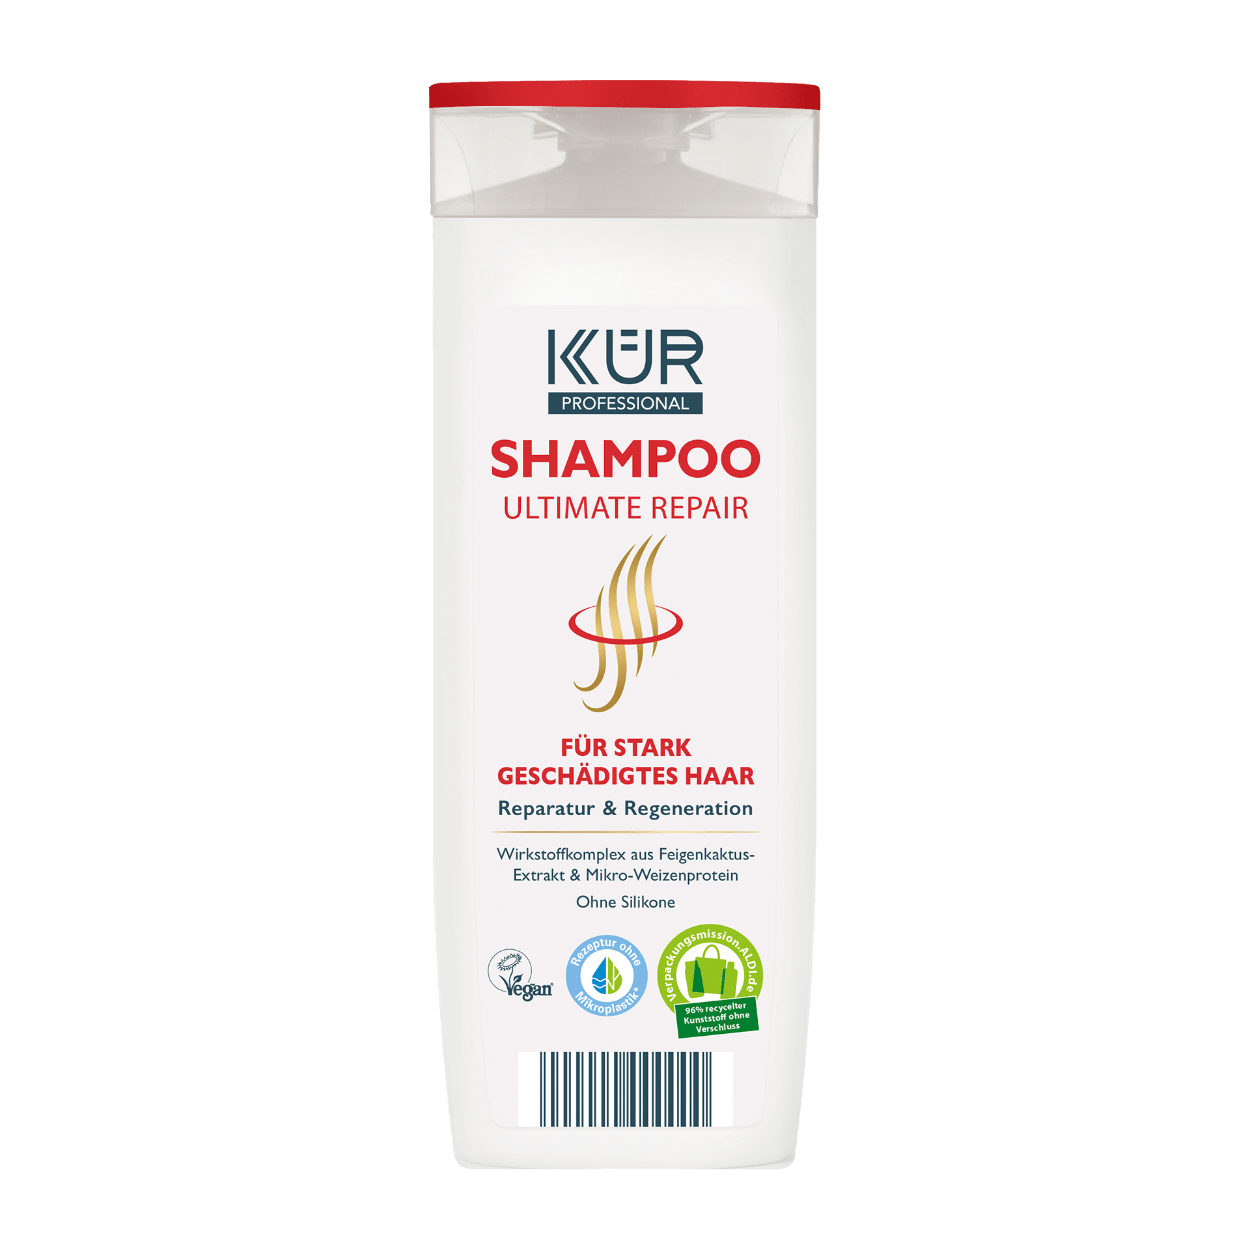 KÜR Professional Shampoo günstig bei